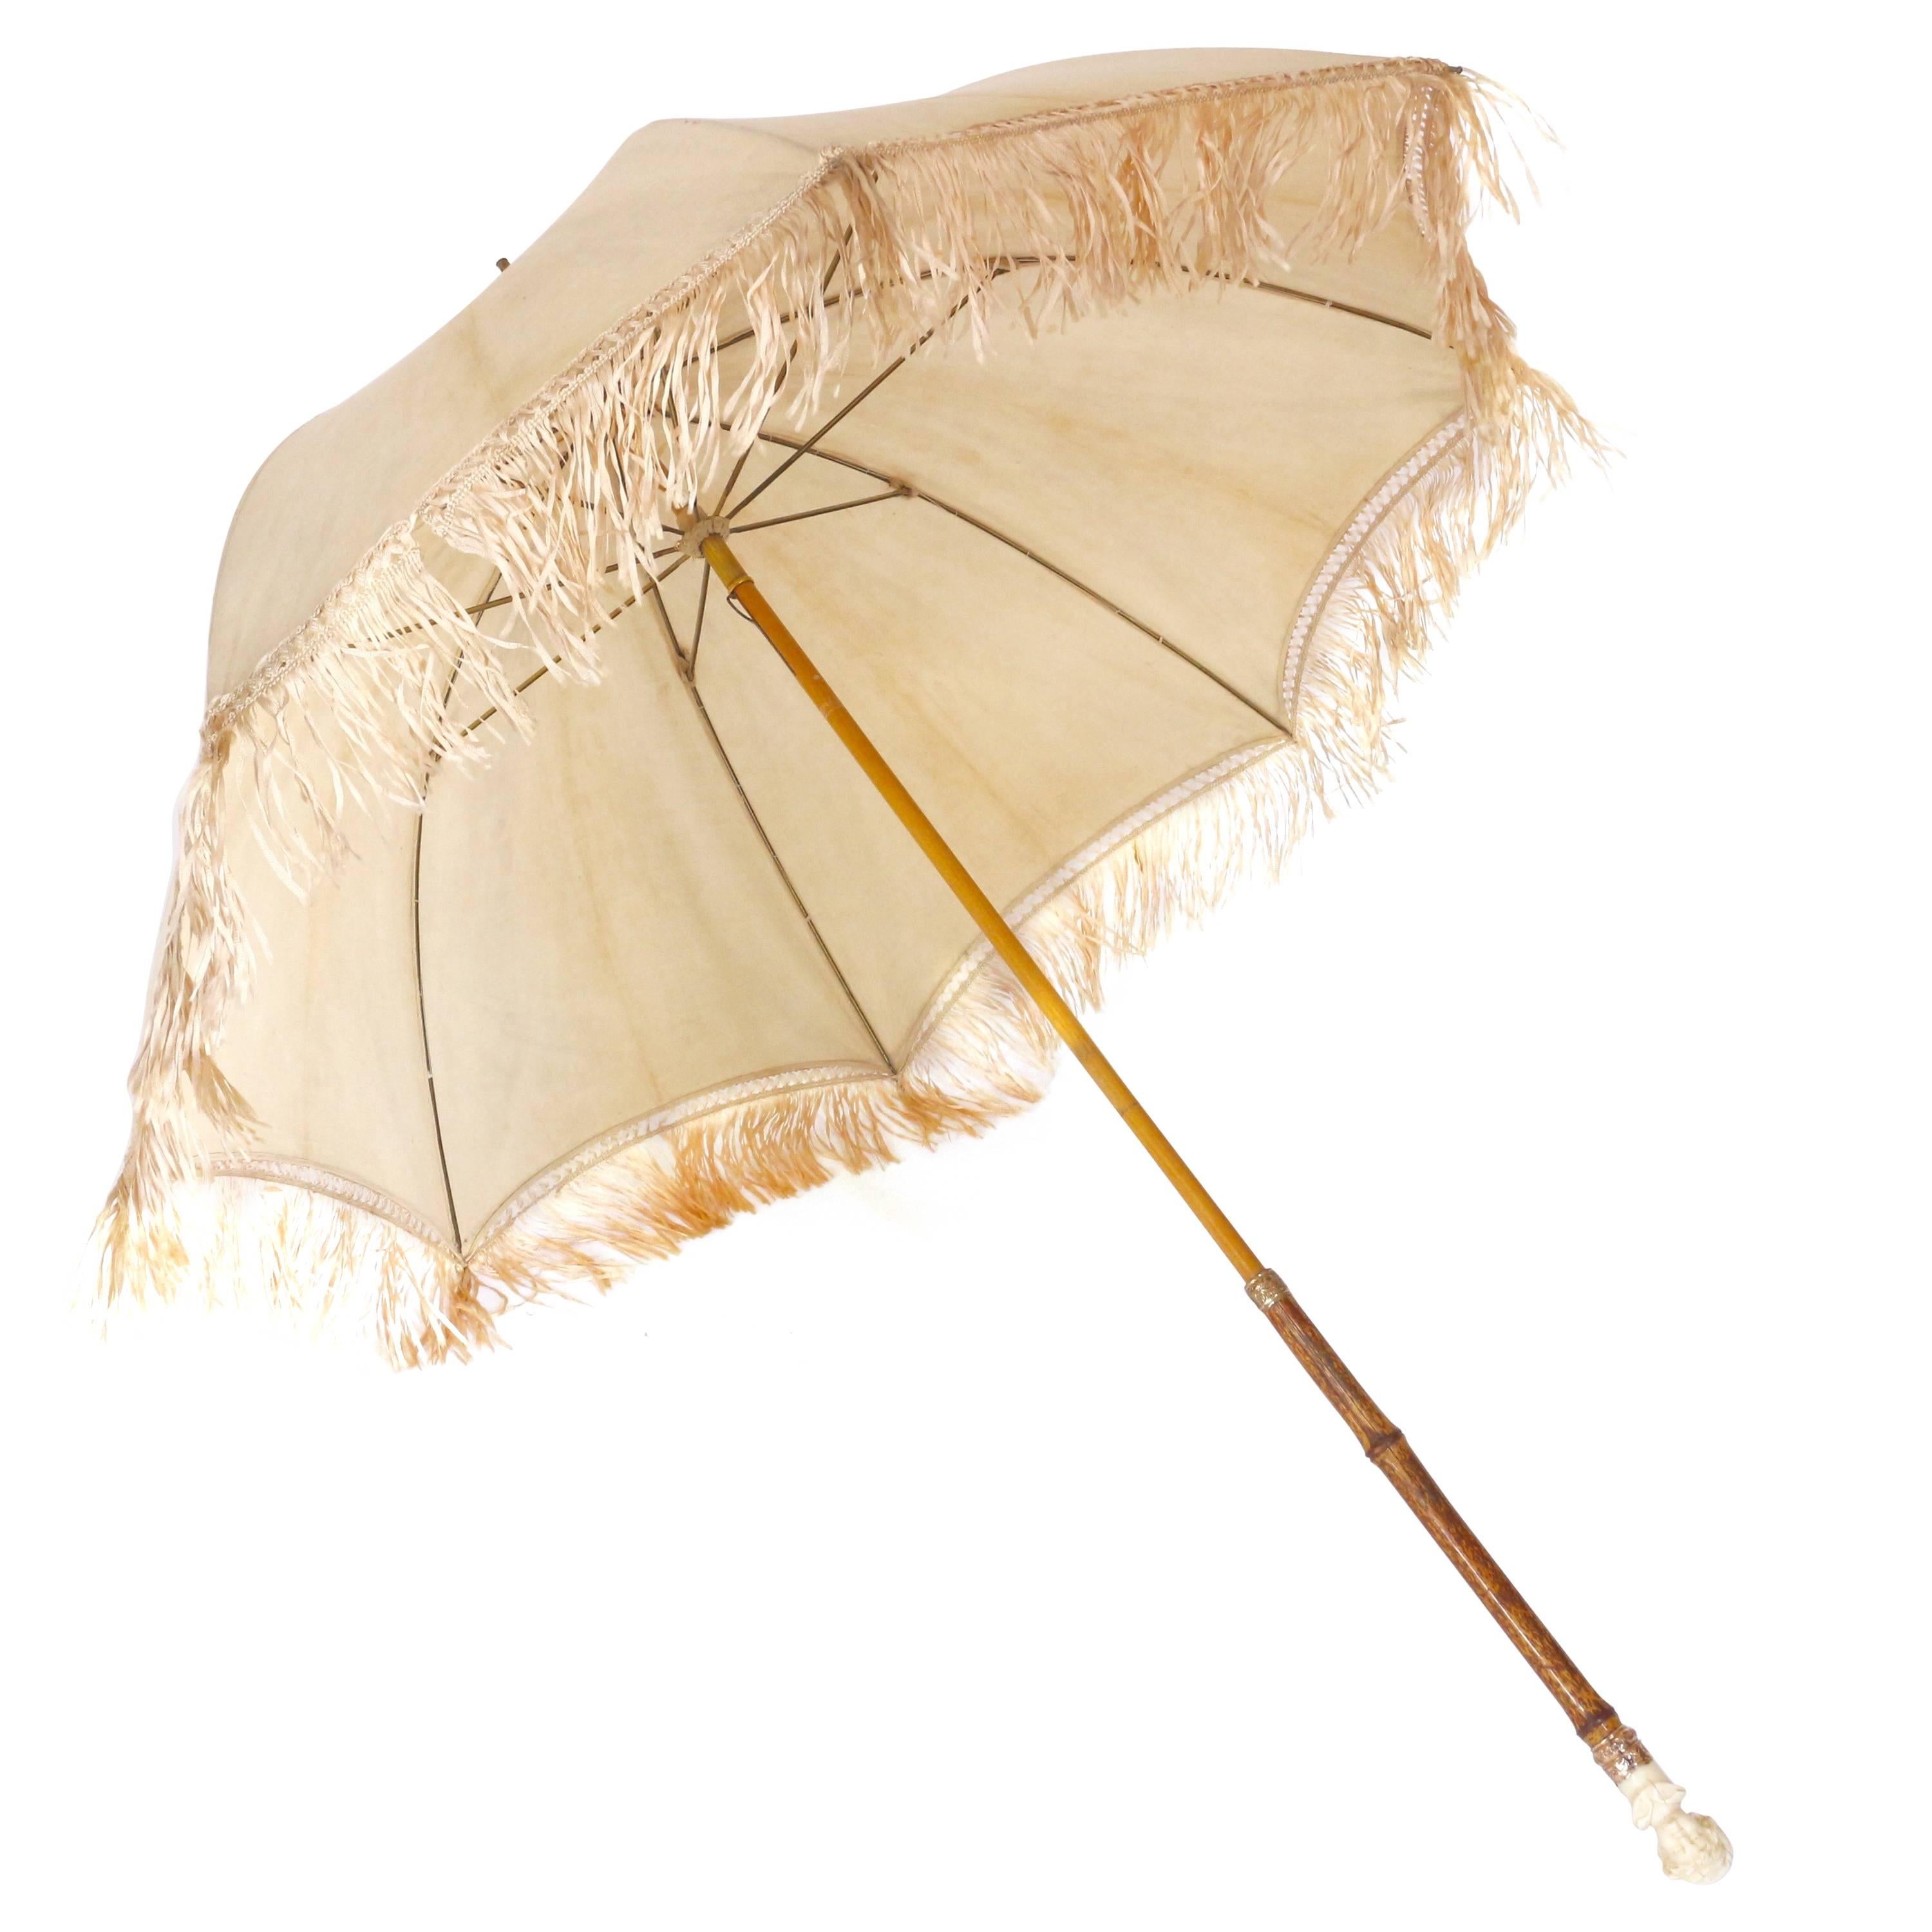 Umbrella with Ivory Head of a Jong Boy, "Belle Époque" circa 1900 For Sale